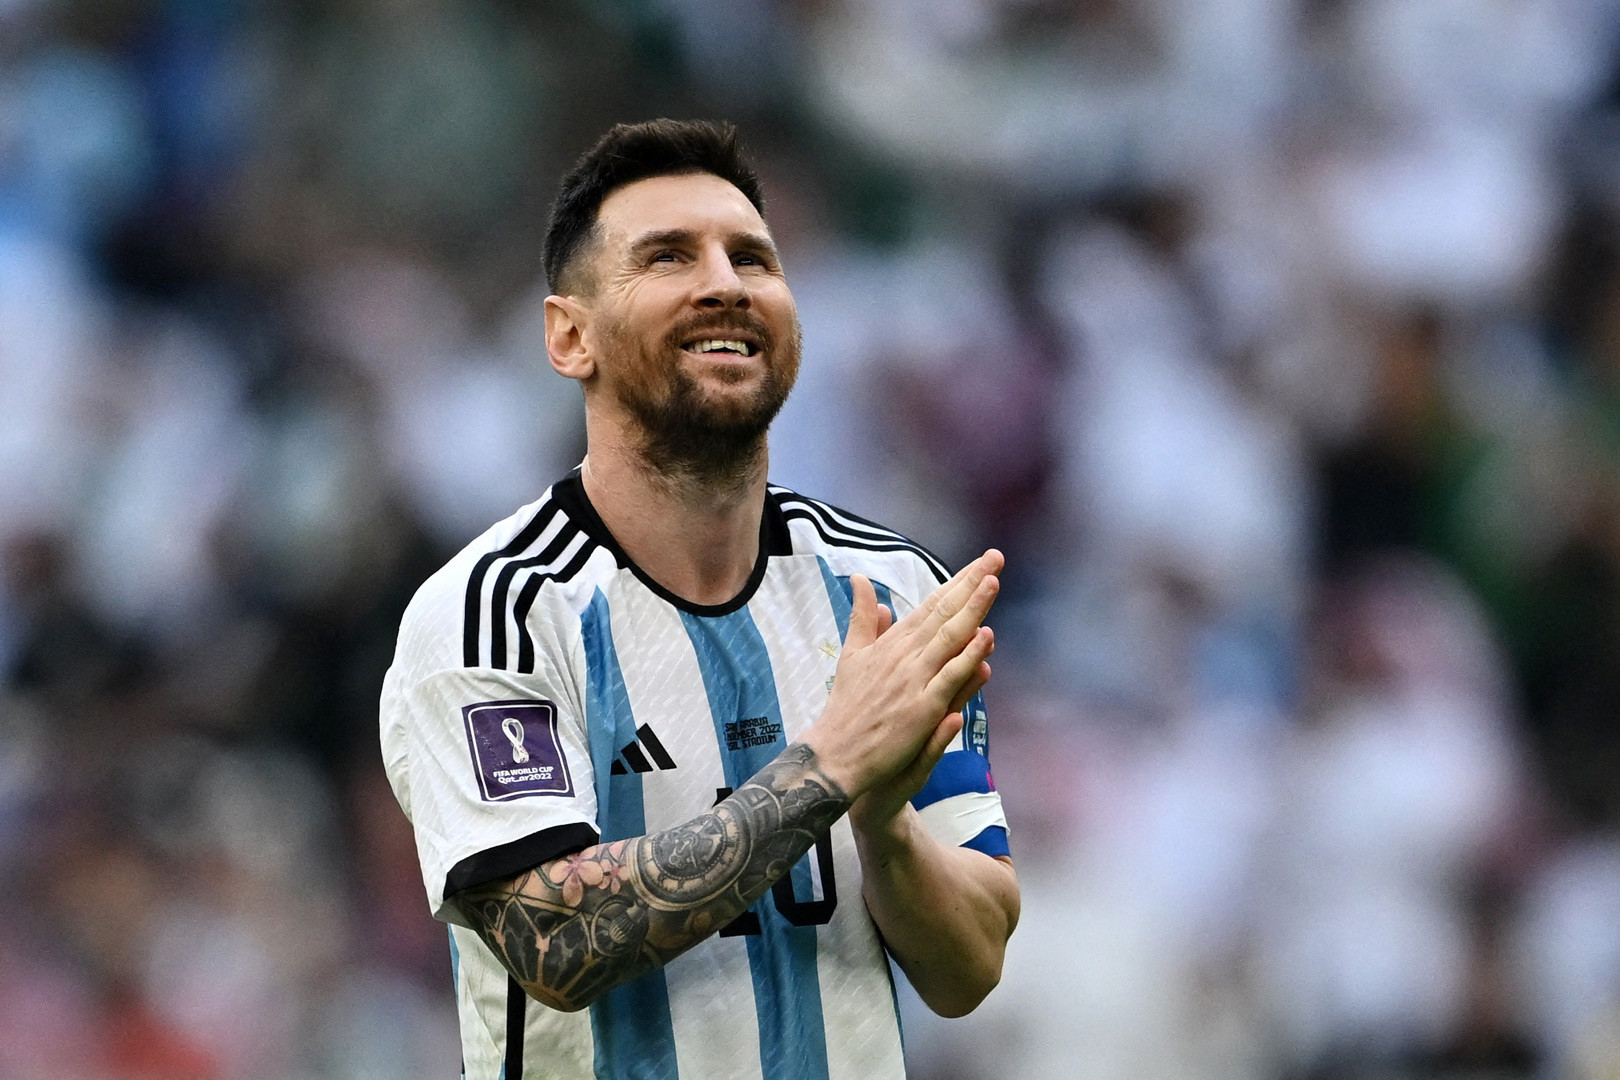 Argentina vs Mexico: Messi cầu nguyện Maradona